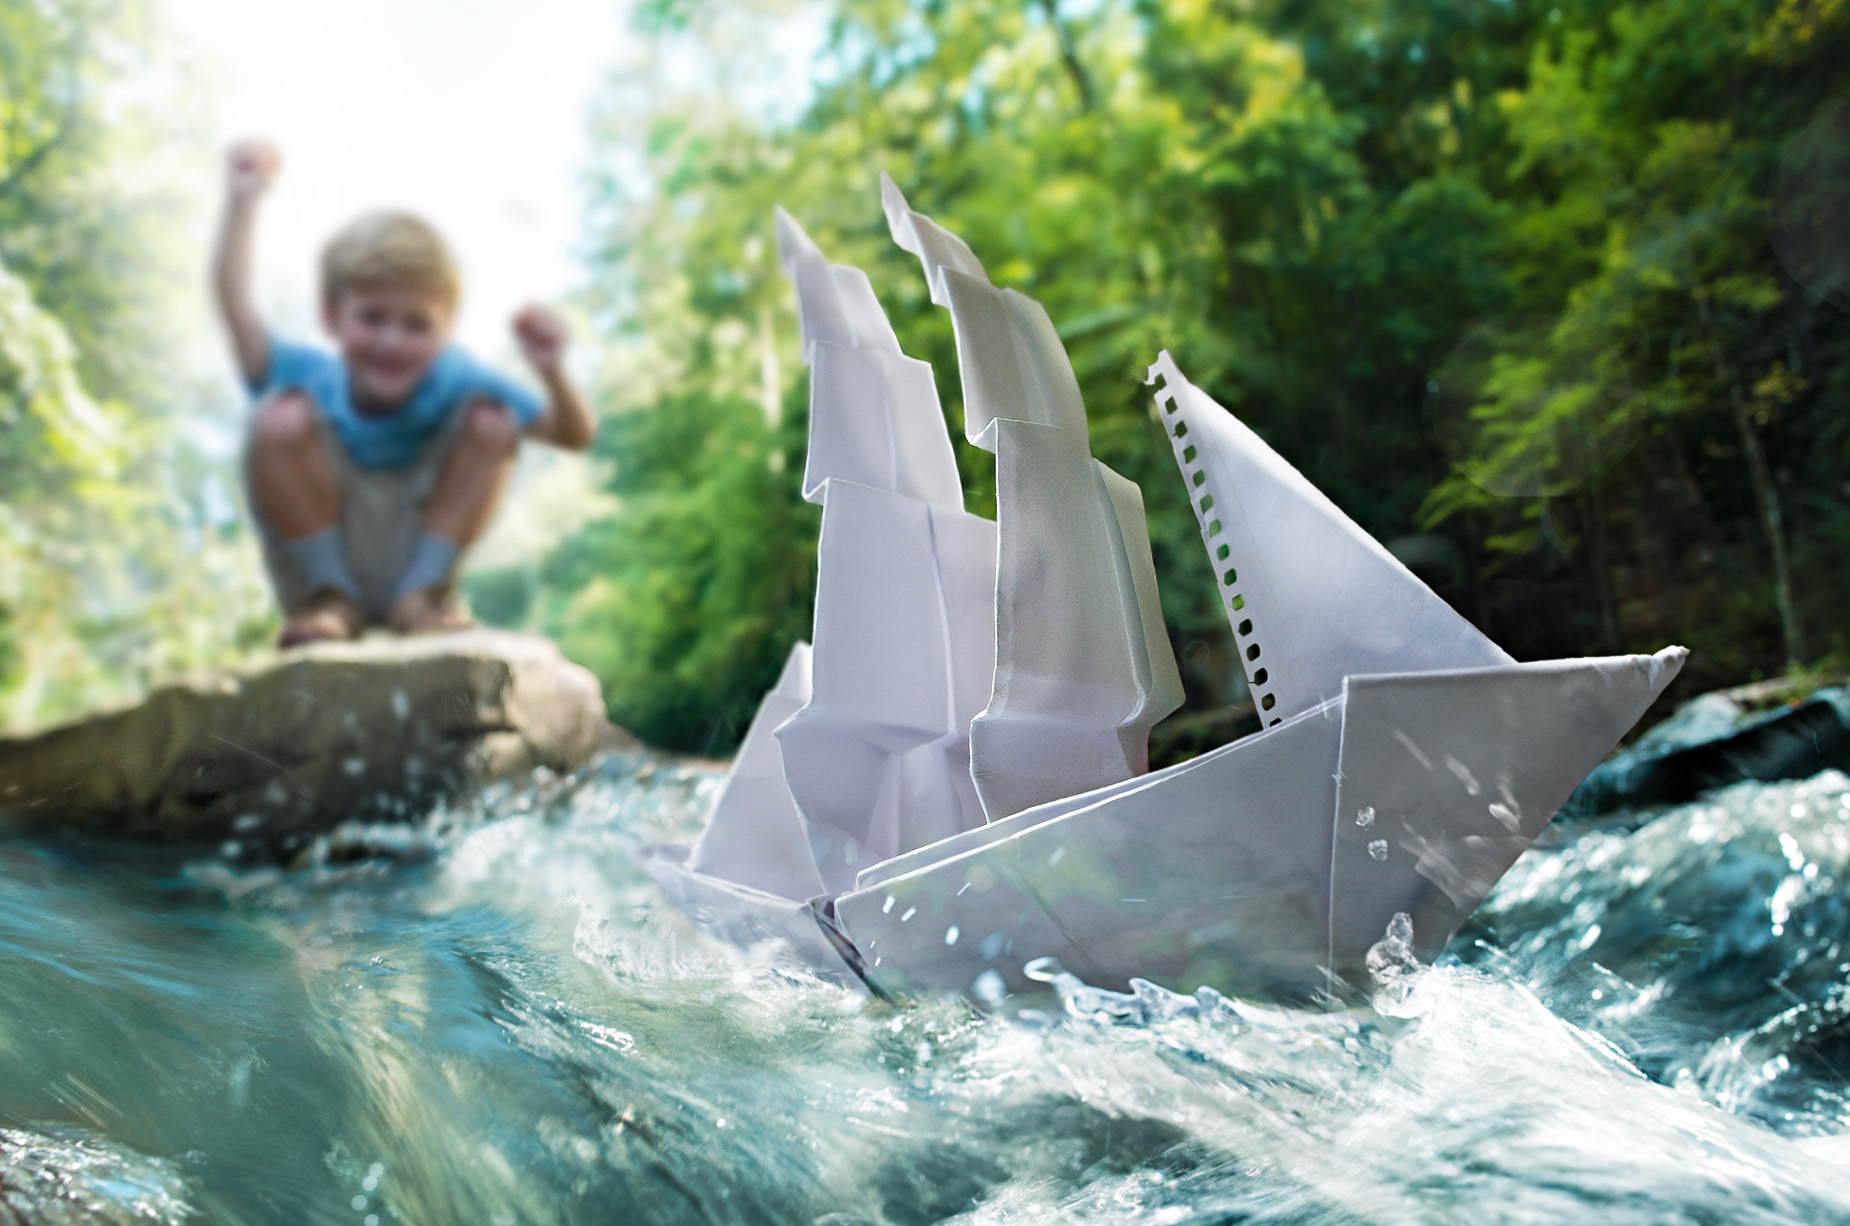 Boy Floats Boat in Creek by Atlanta Lifestyle Photographer